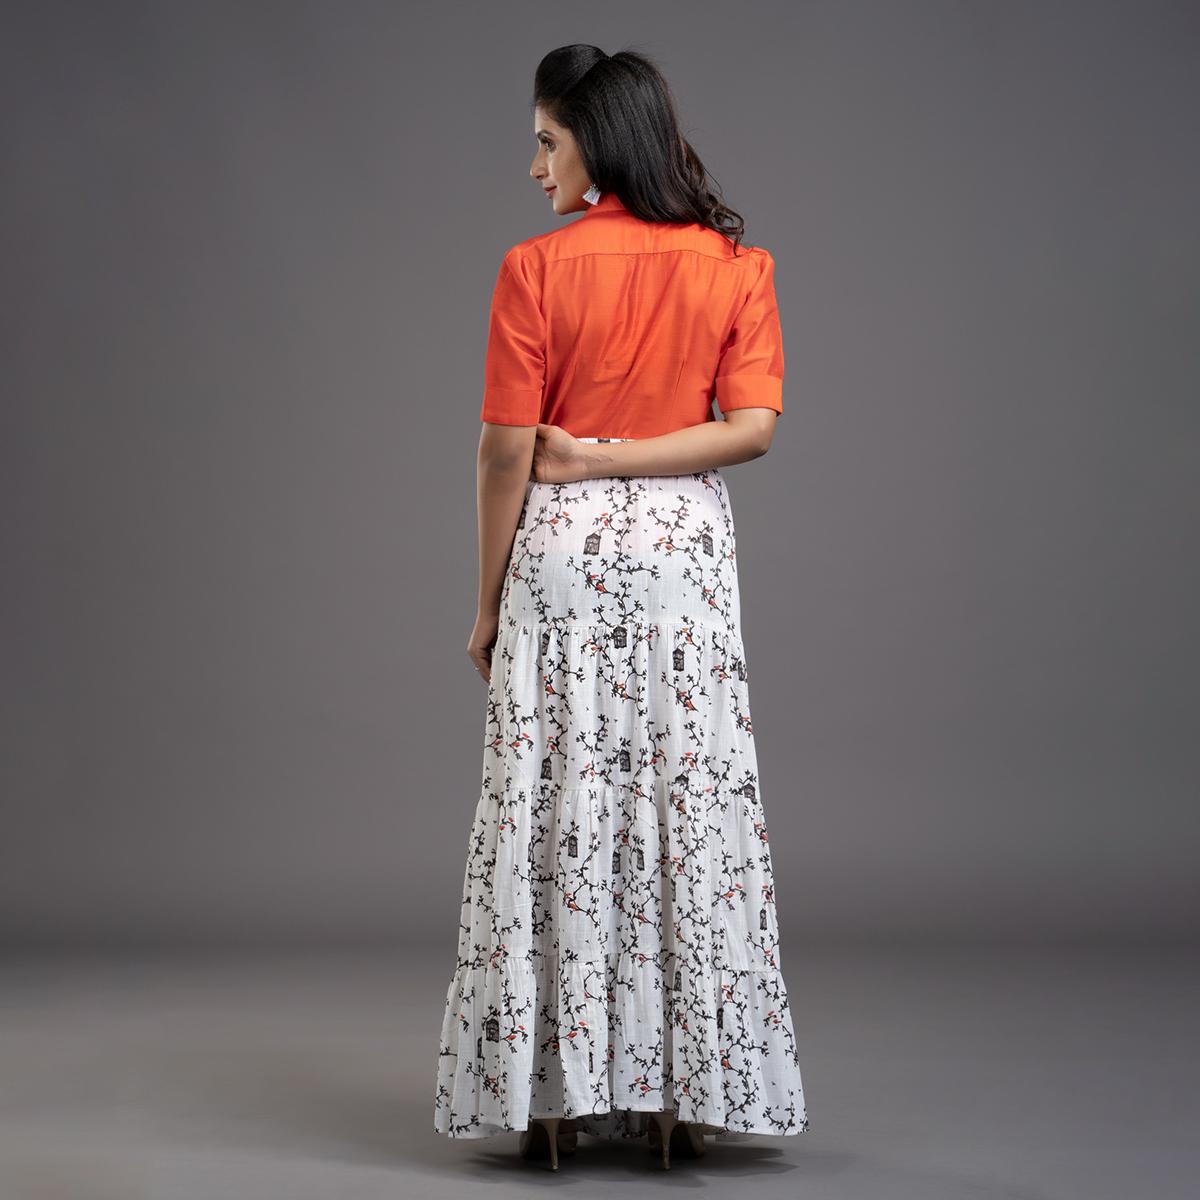 Zella Solid Color Cotton Silk Elbow Sleeve Shirt & Cotton Printed Tyre Skirt Set - Orange & White